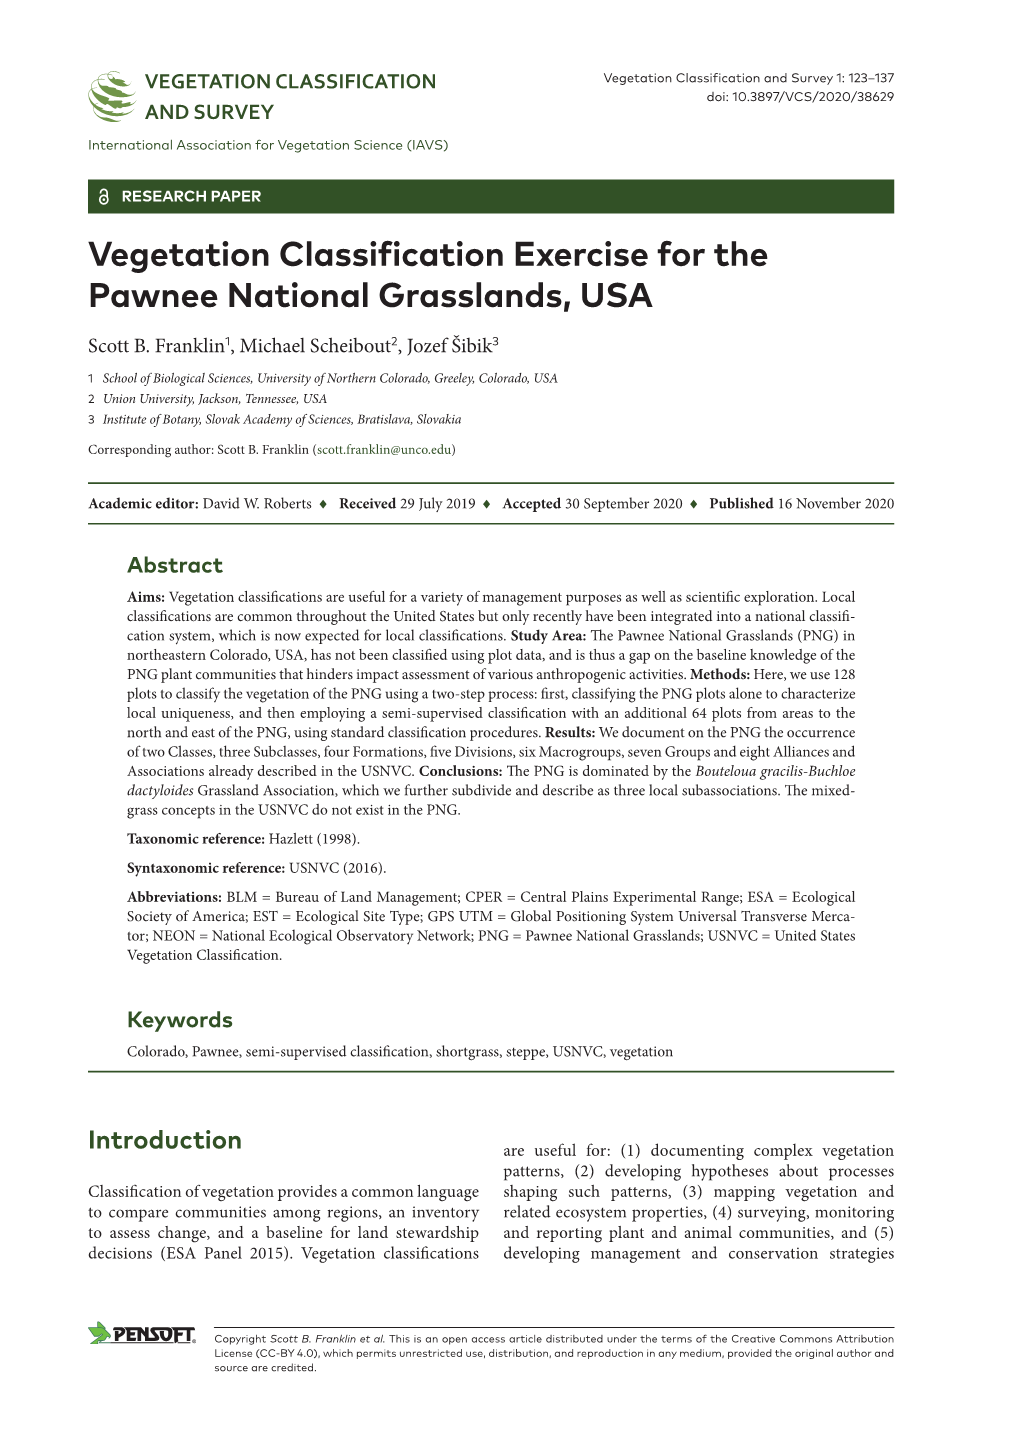 ﻿Vegetation Classification Exercise for the Pawnee National Grasslands